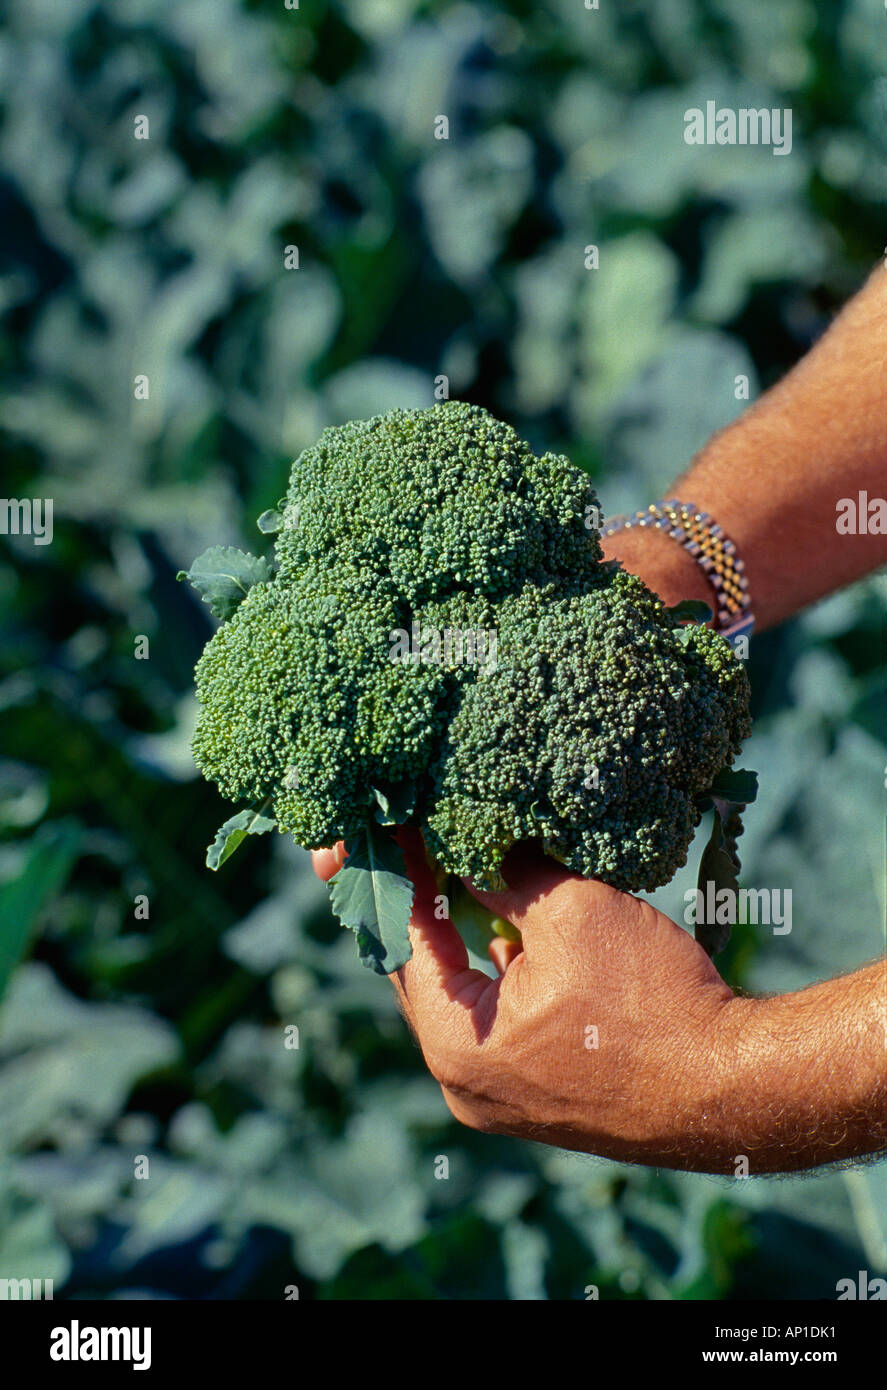 Agriculture - Farmer's hands holding a freshly harvested head of broccoli / Texas, USA. Stock Photo